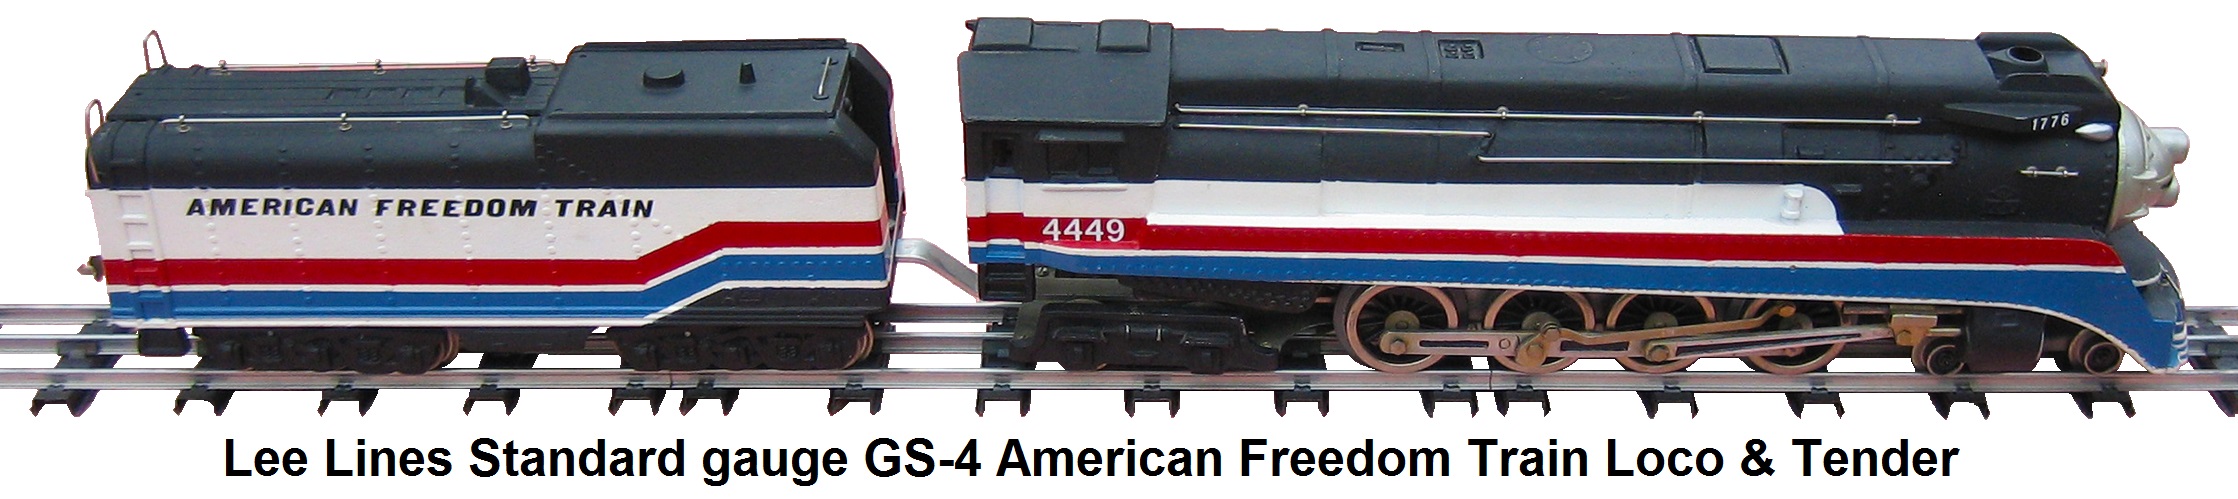 Lee Lines Standard gauge 4-8-4 SP Daylight GS-4 American Freedom Train Locomotive & Tender